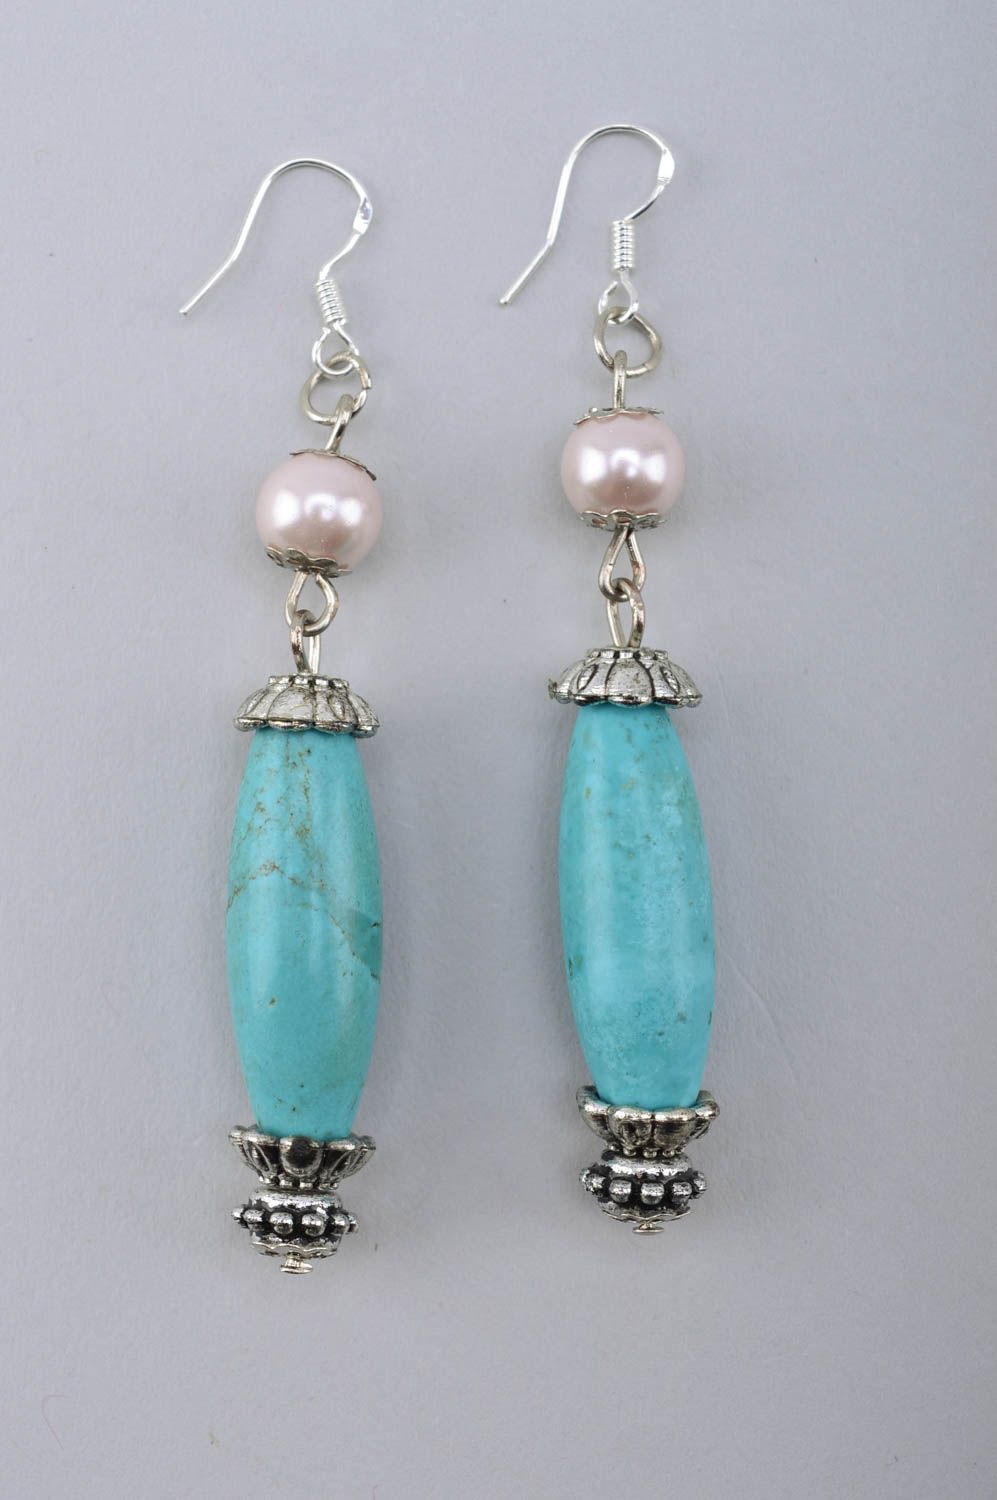 Handmade beaded earrings ideas beautiful jewellery costume jewelry designs photo 2